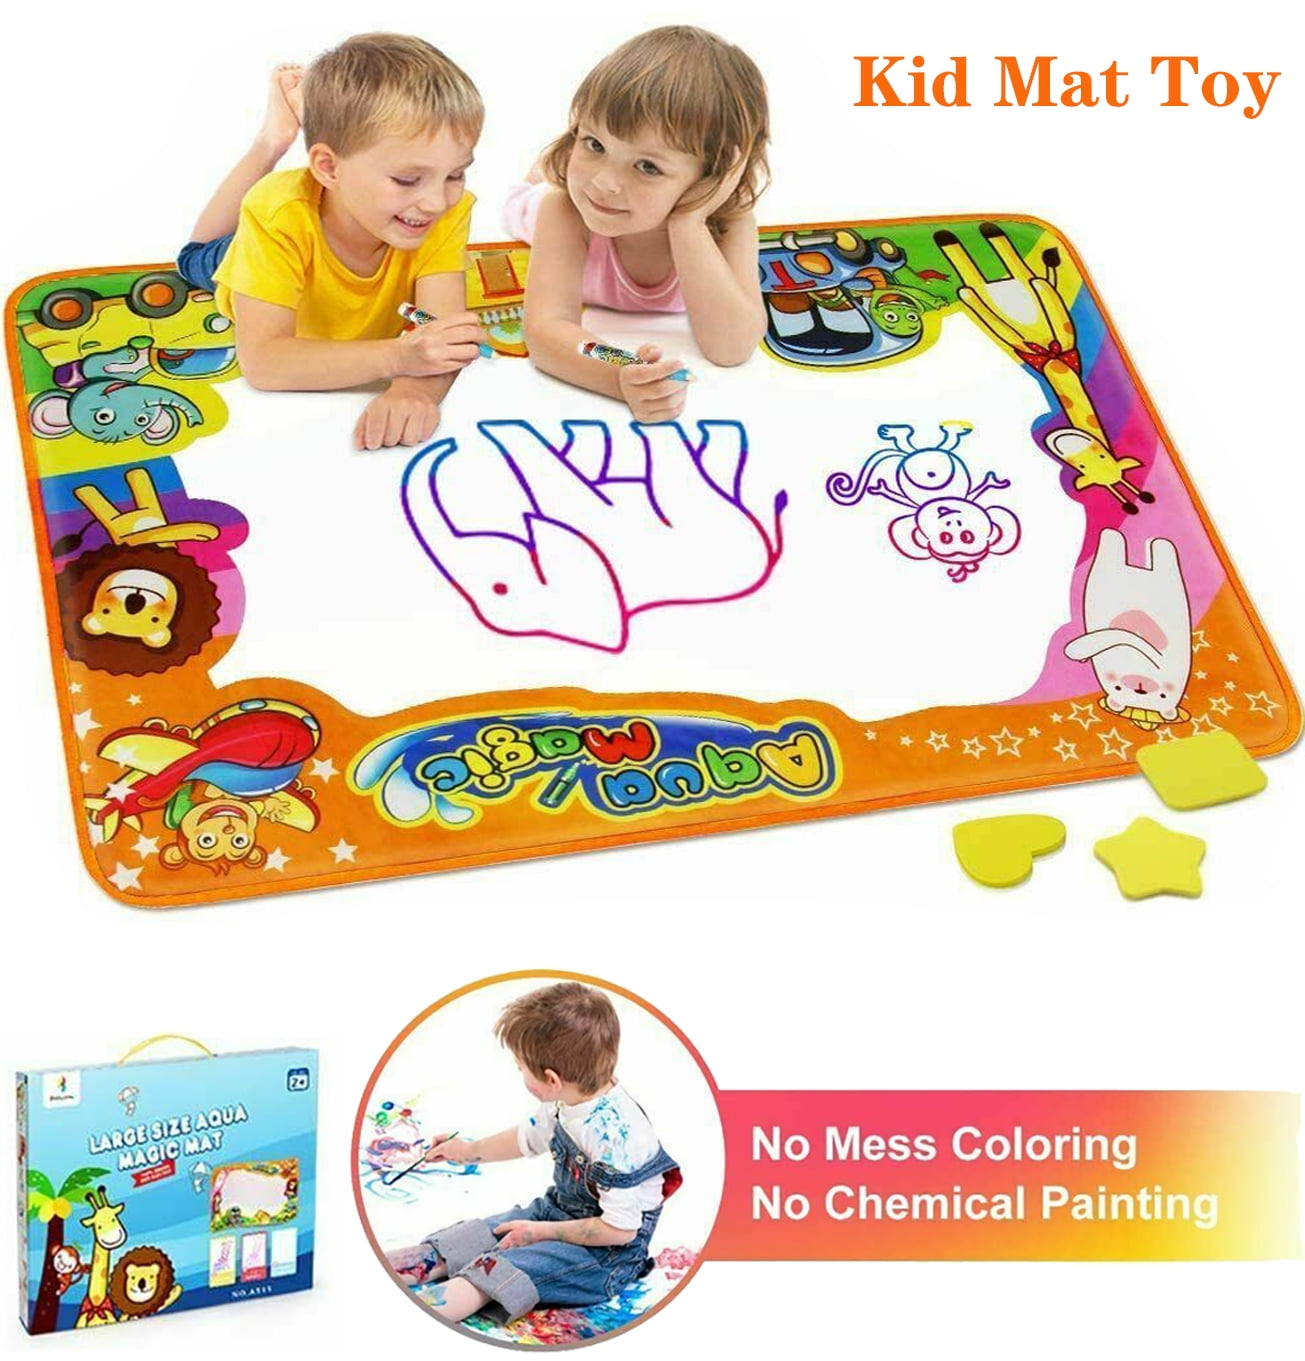 Buy Chad Valley Aqua Magic Mat | Drawing and painting toys | Argos